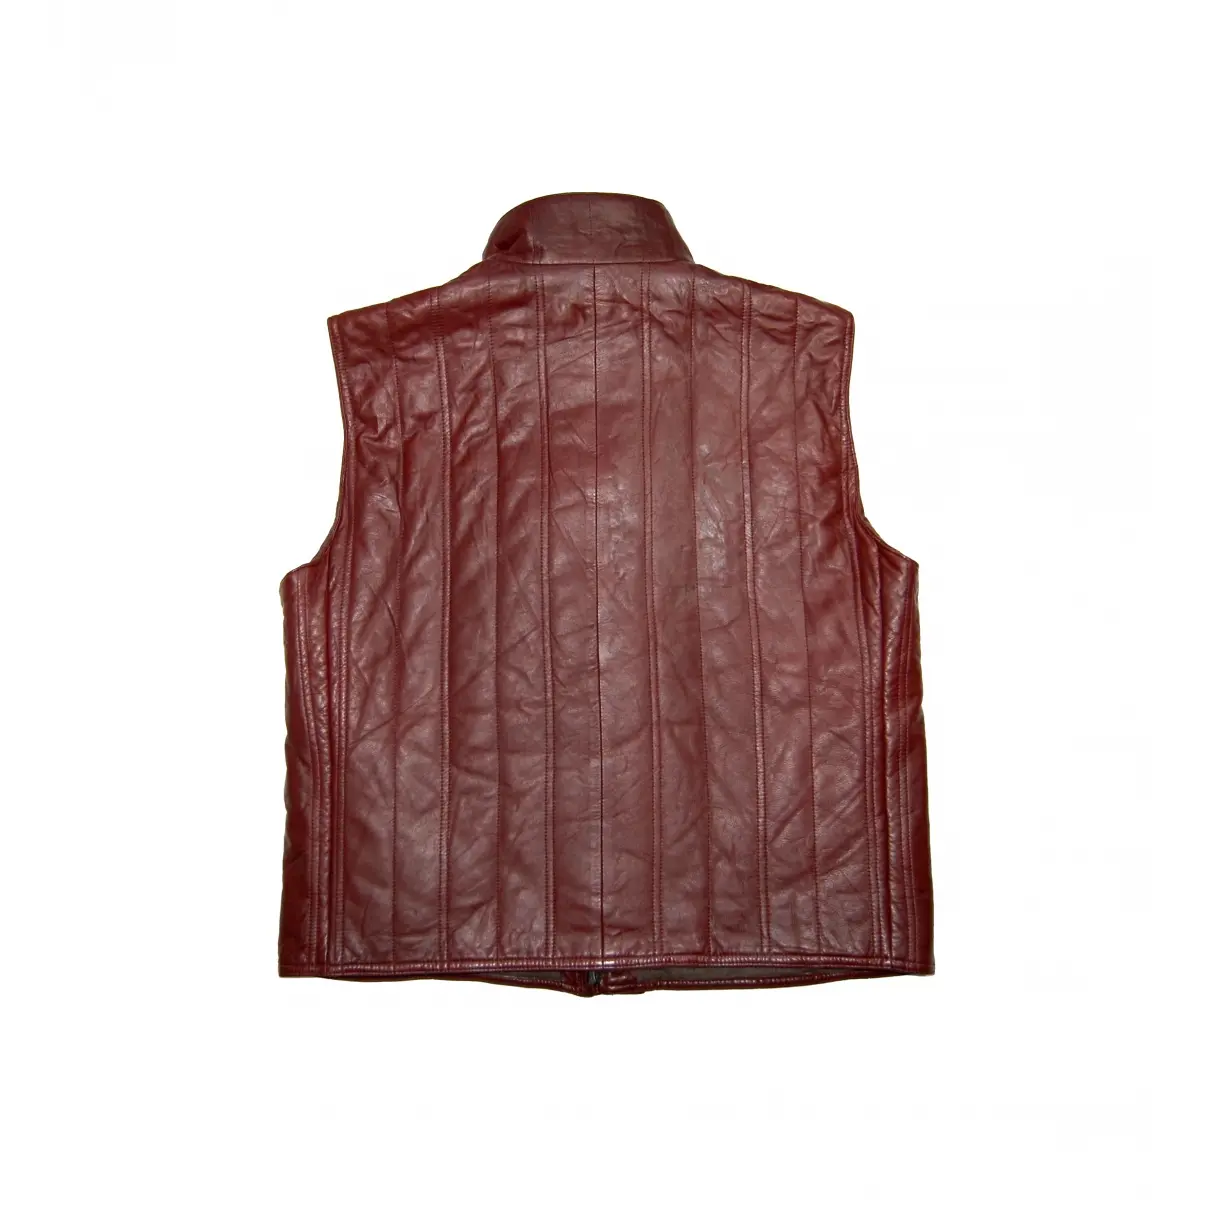 Buy Salvatore Ferragamo Leather vest online